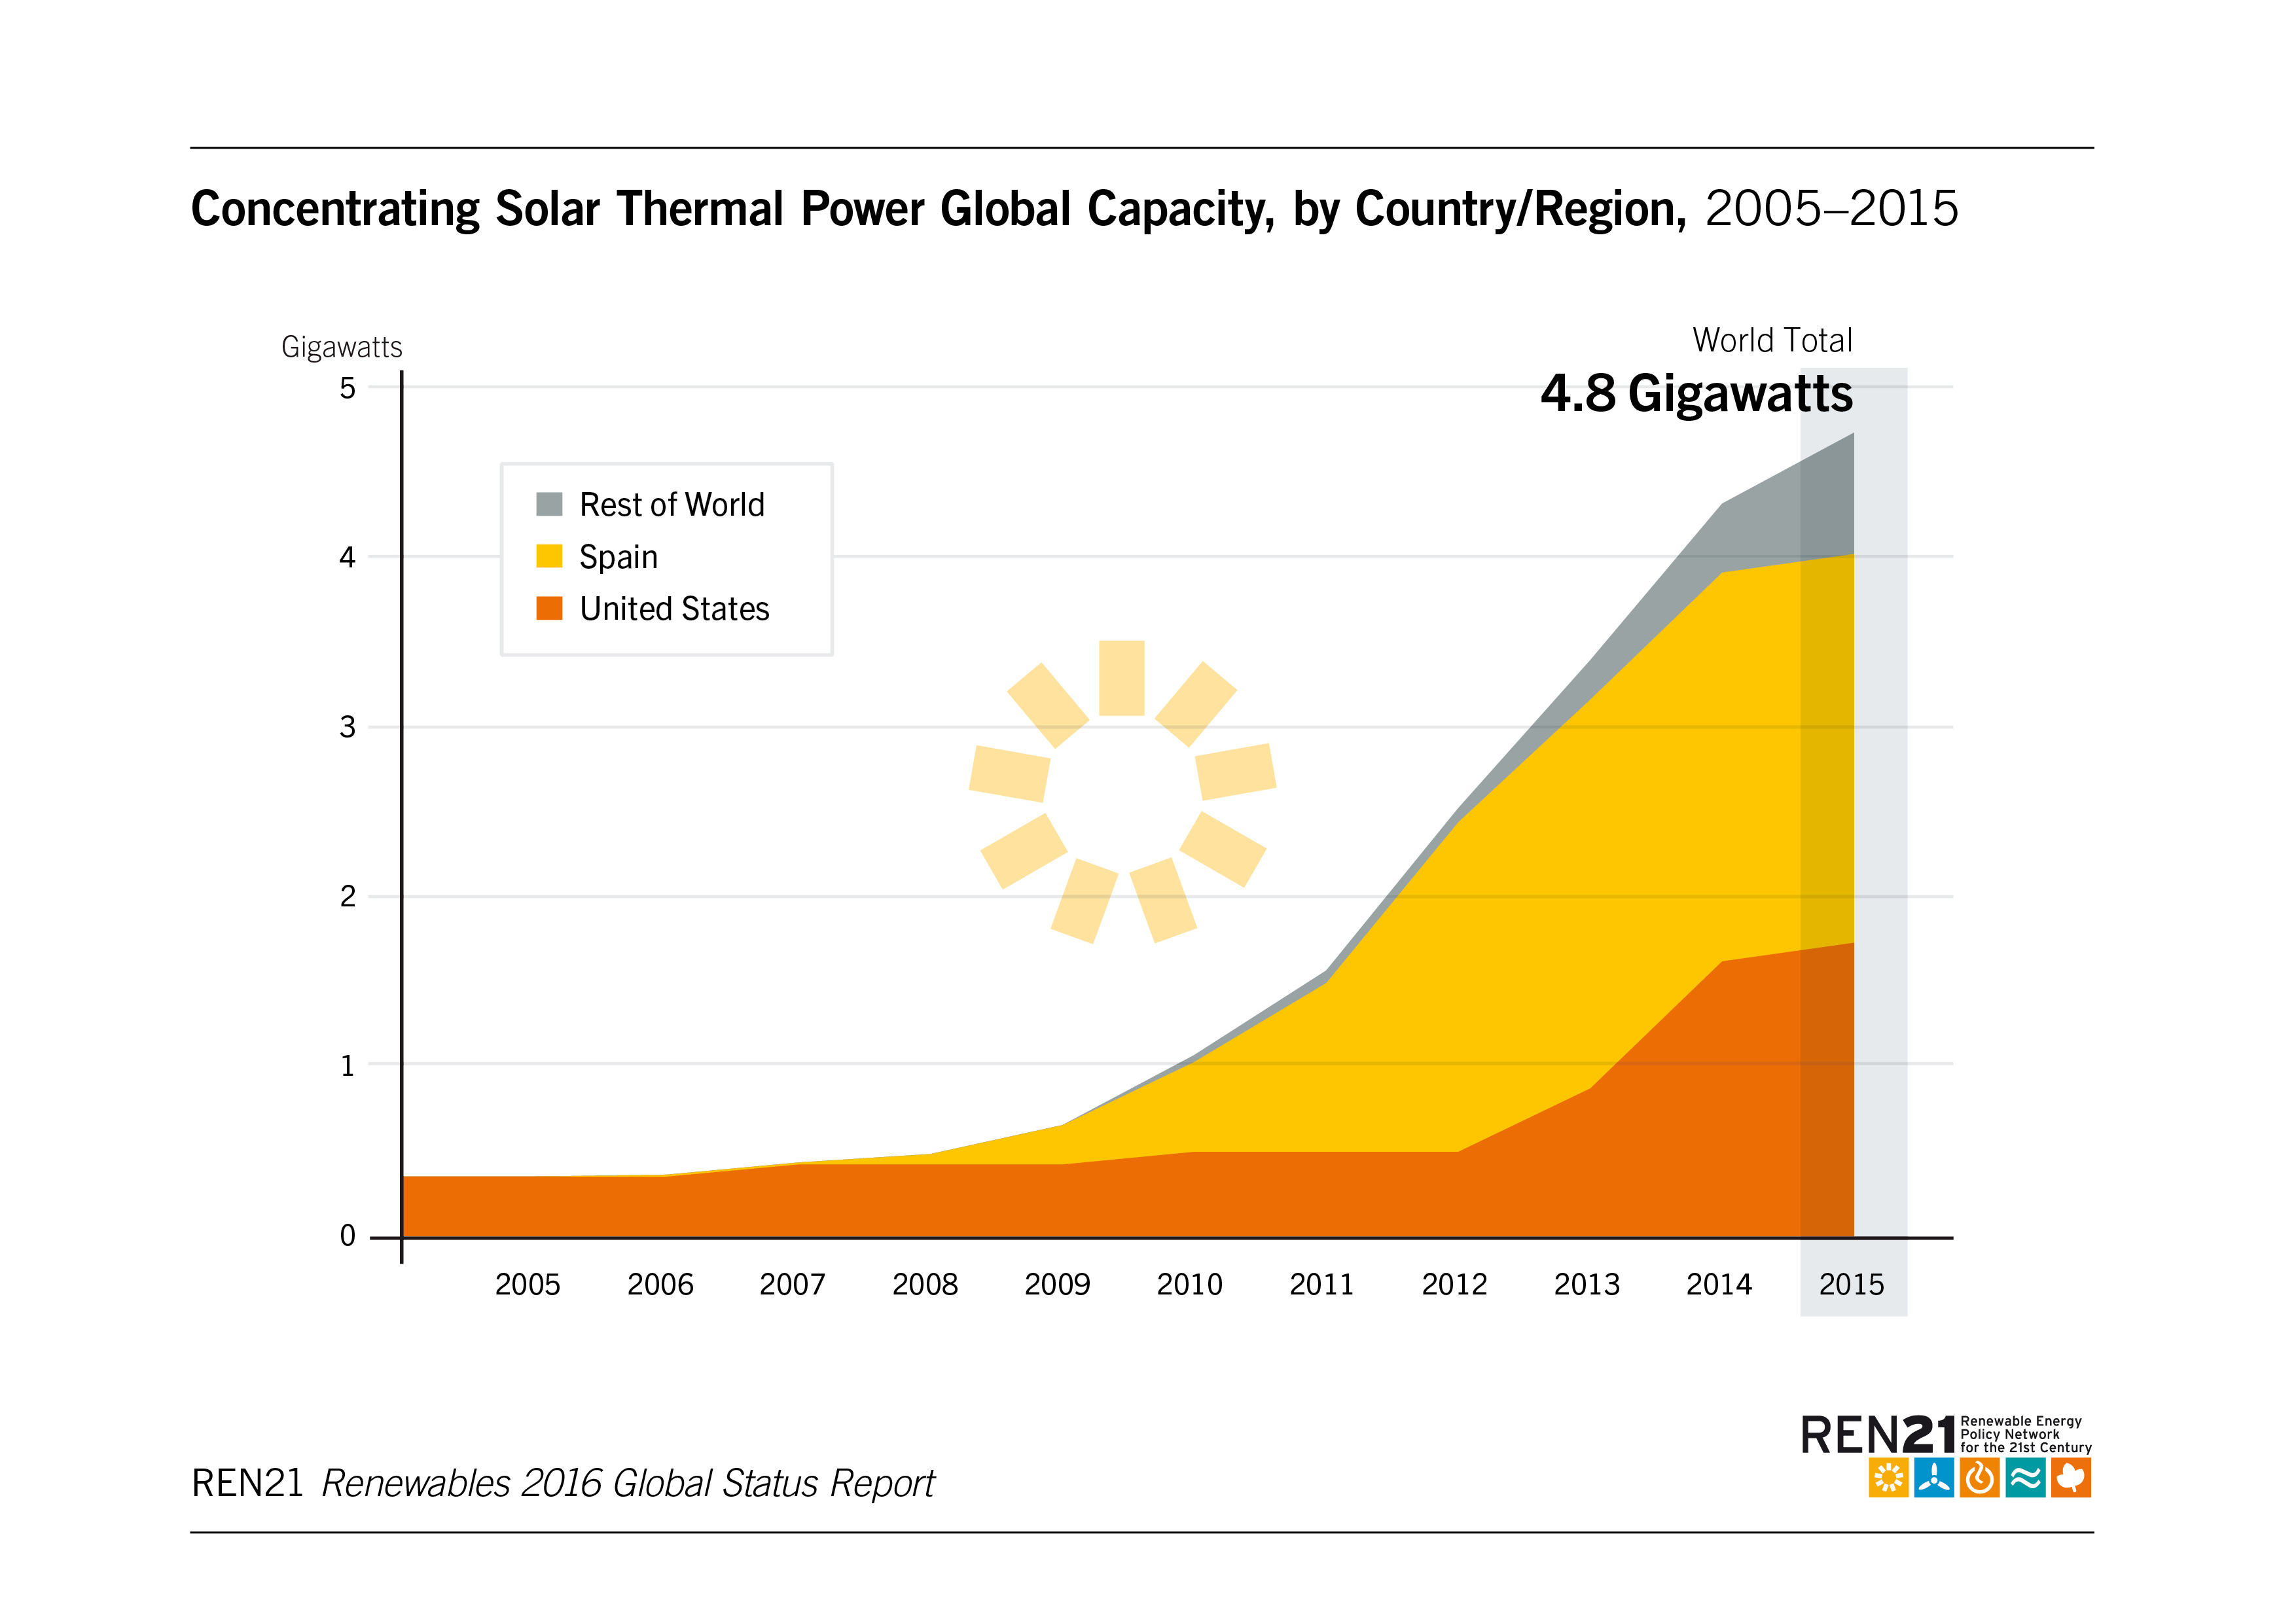 http://www.evwind.com/wp-content/uploads/2016/06/Concentration-Solar-Power-capacity-2005-2015.jpg